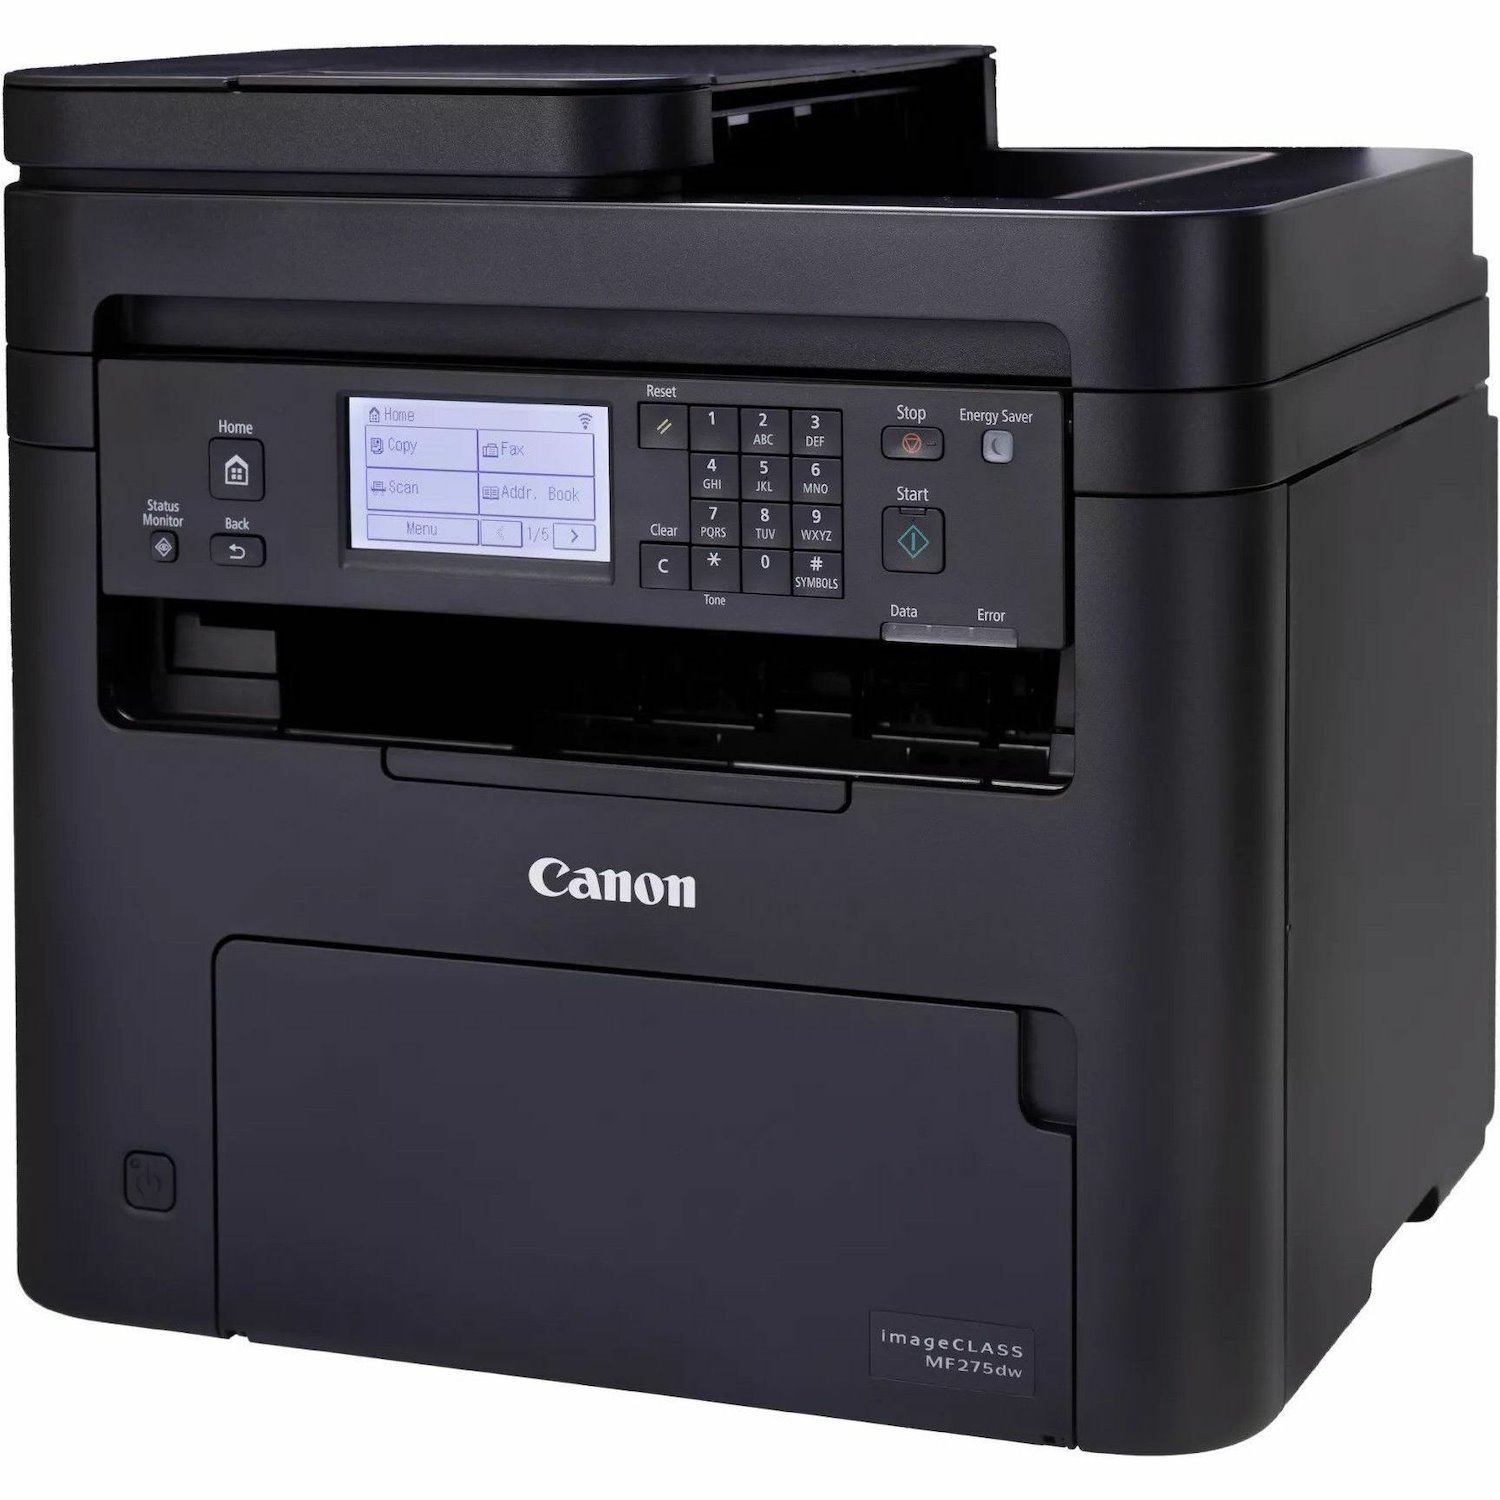 Canon imageCLASS MF275dw Wireless Laser Multifunction Printer - Monochrome